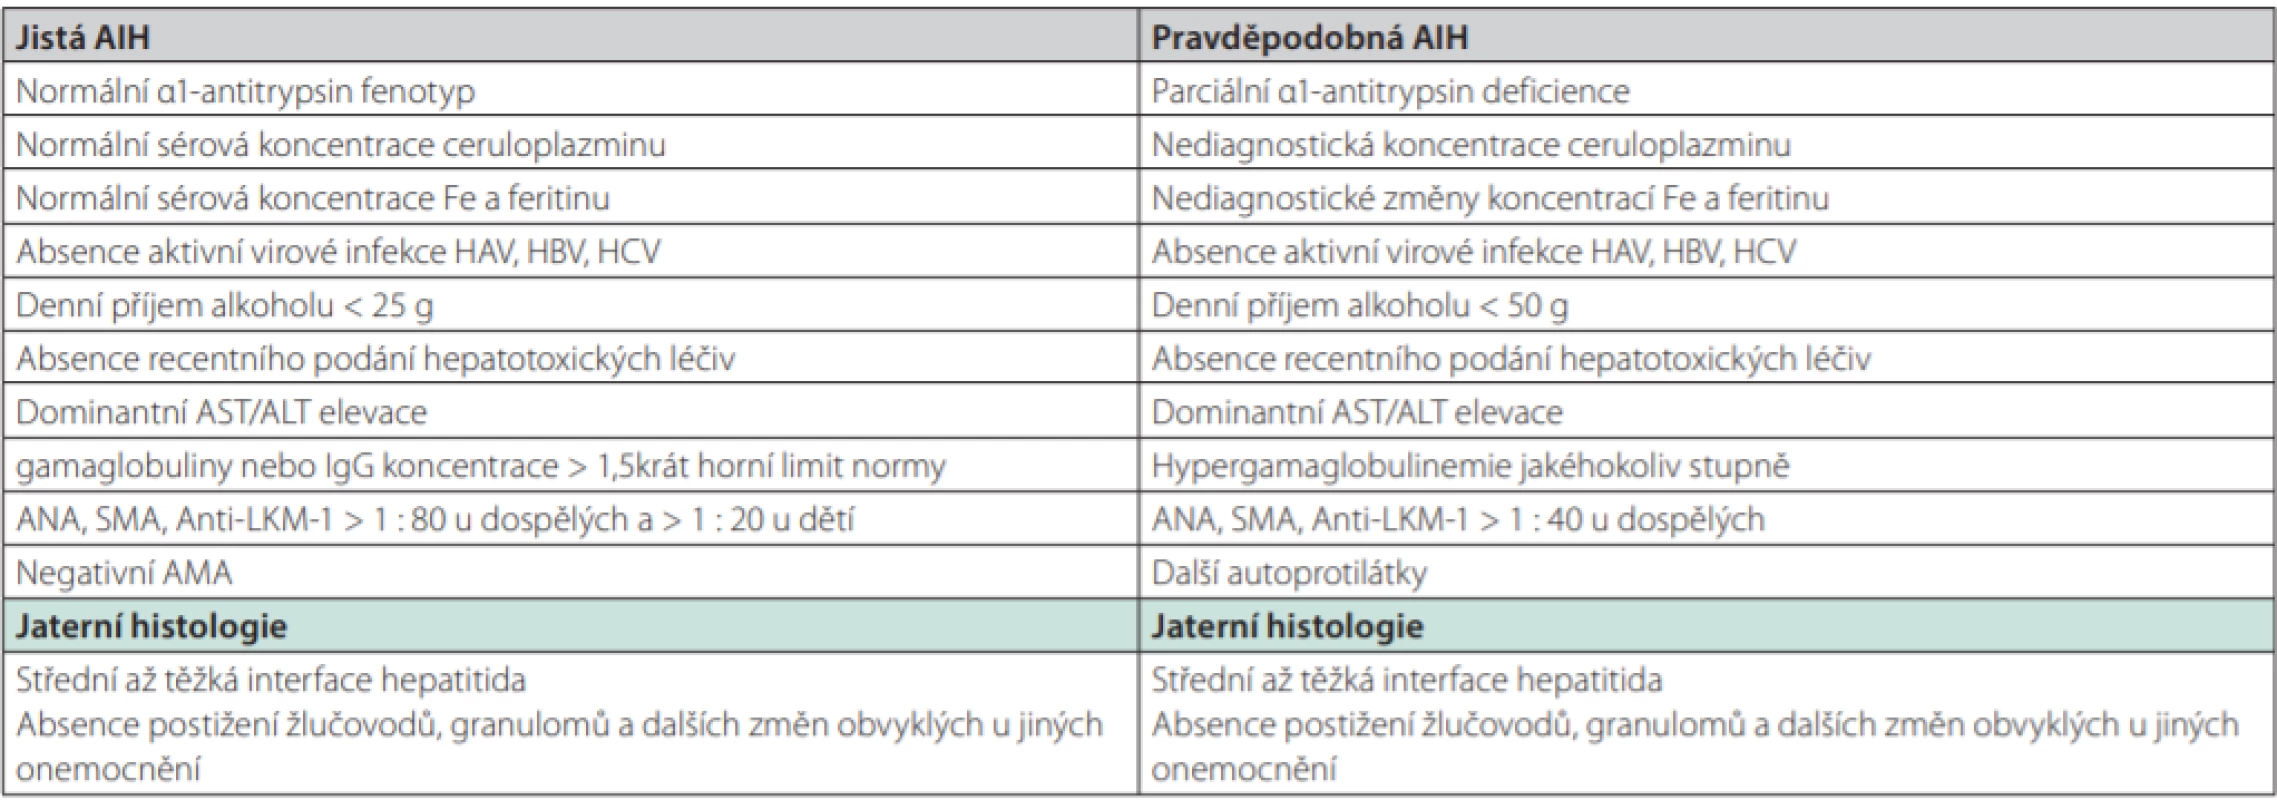 Diagnostická kritéria pro AIH podle IAIHG 1999 